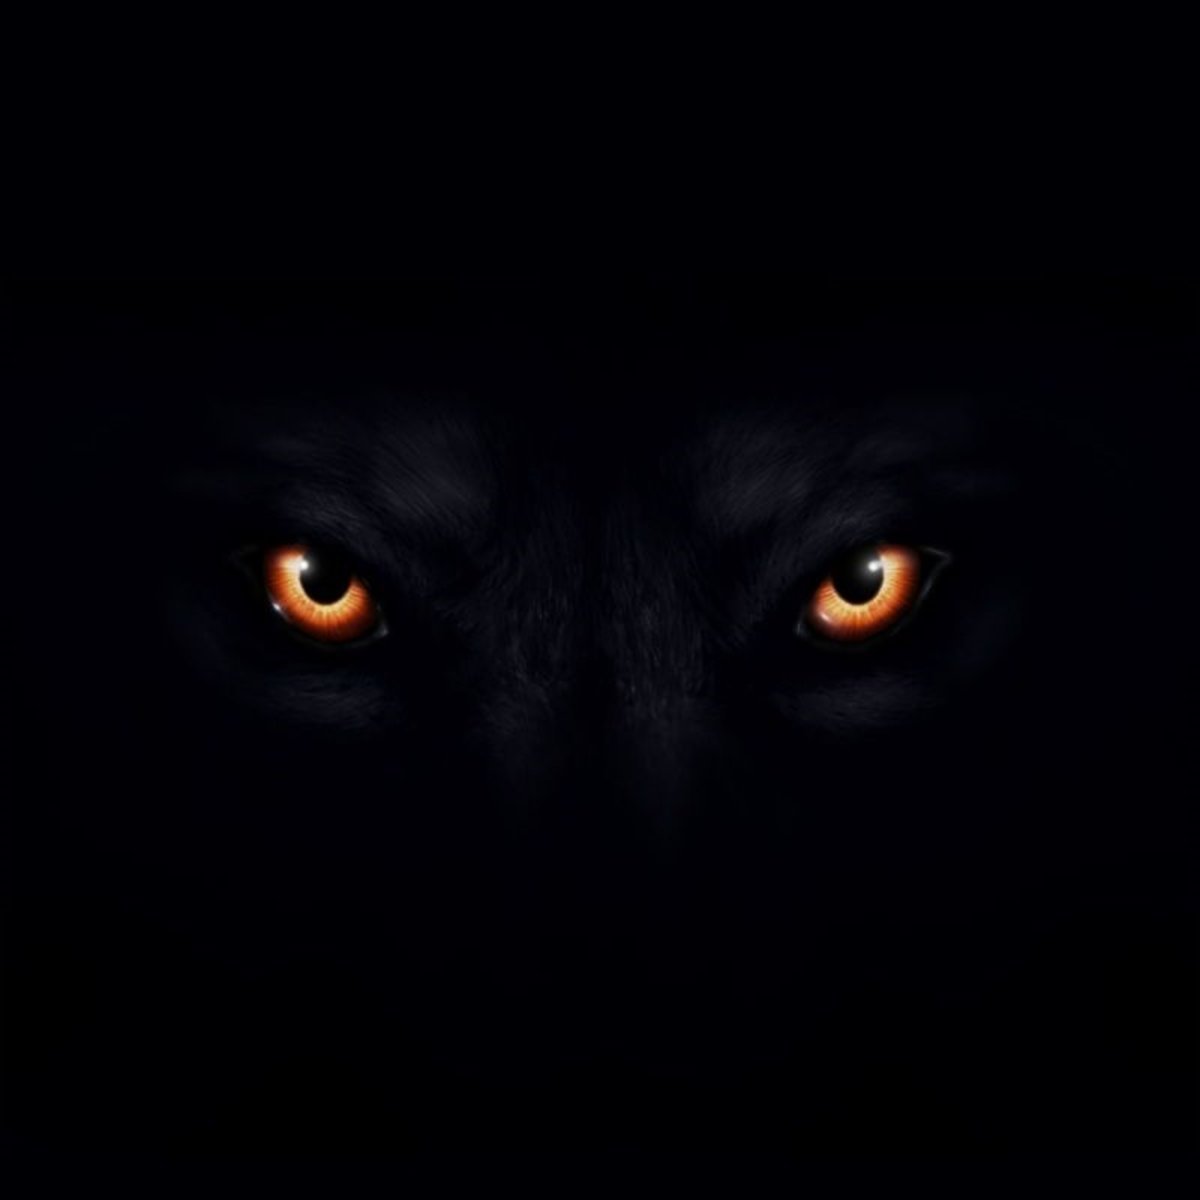 Глаза волка ночью. Глаза волка в темноте. Взгляд волка. Глаза волка на черном фоне. Волчьи глаза на черном фоне.